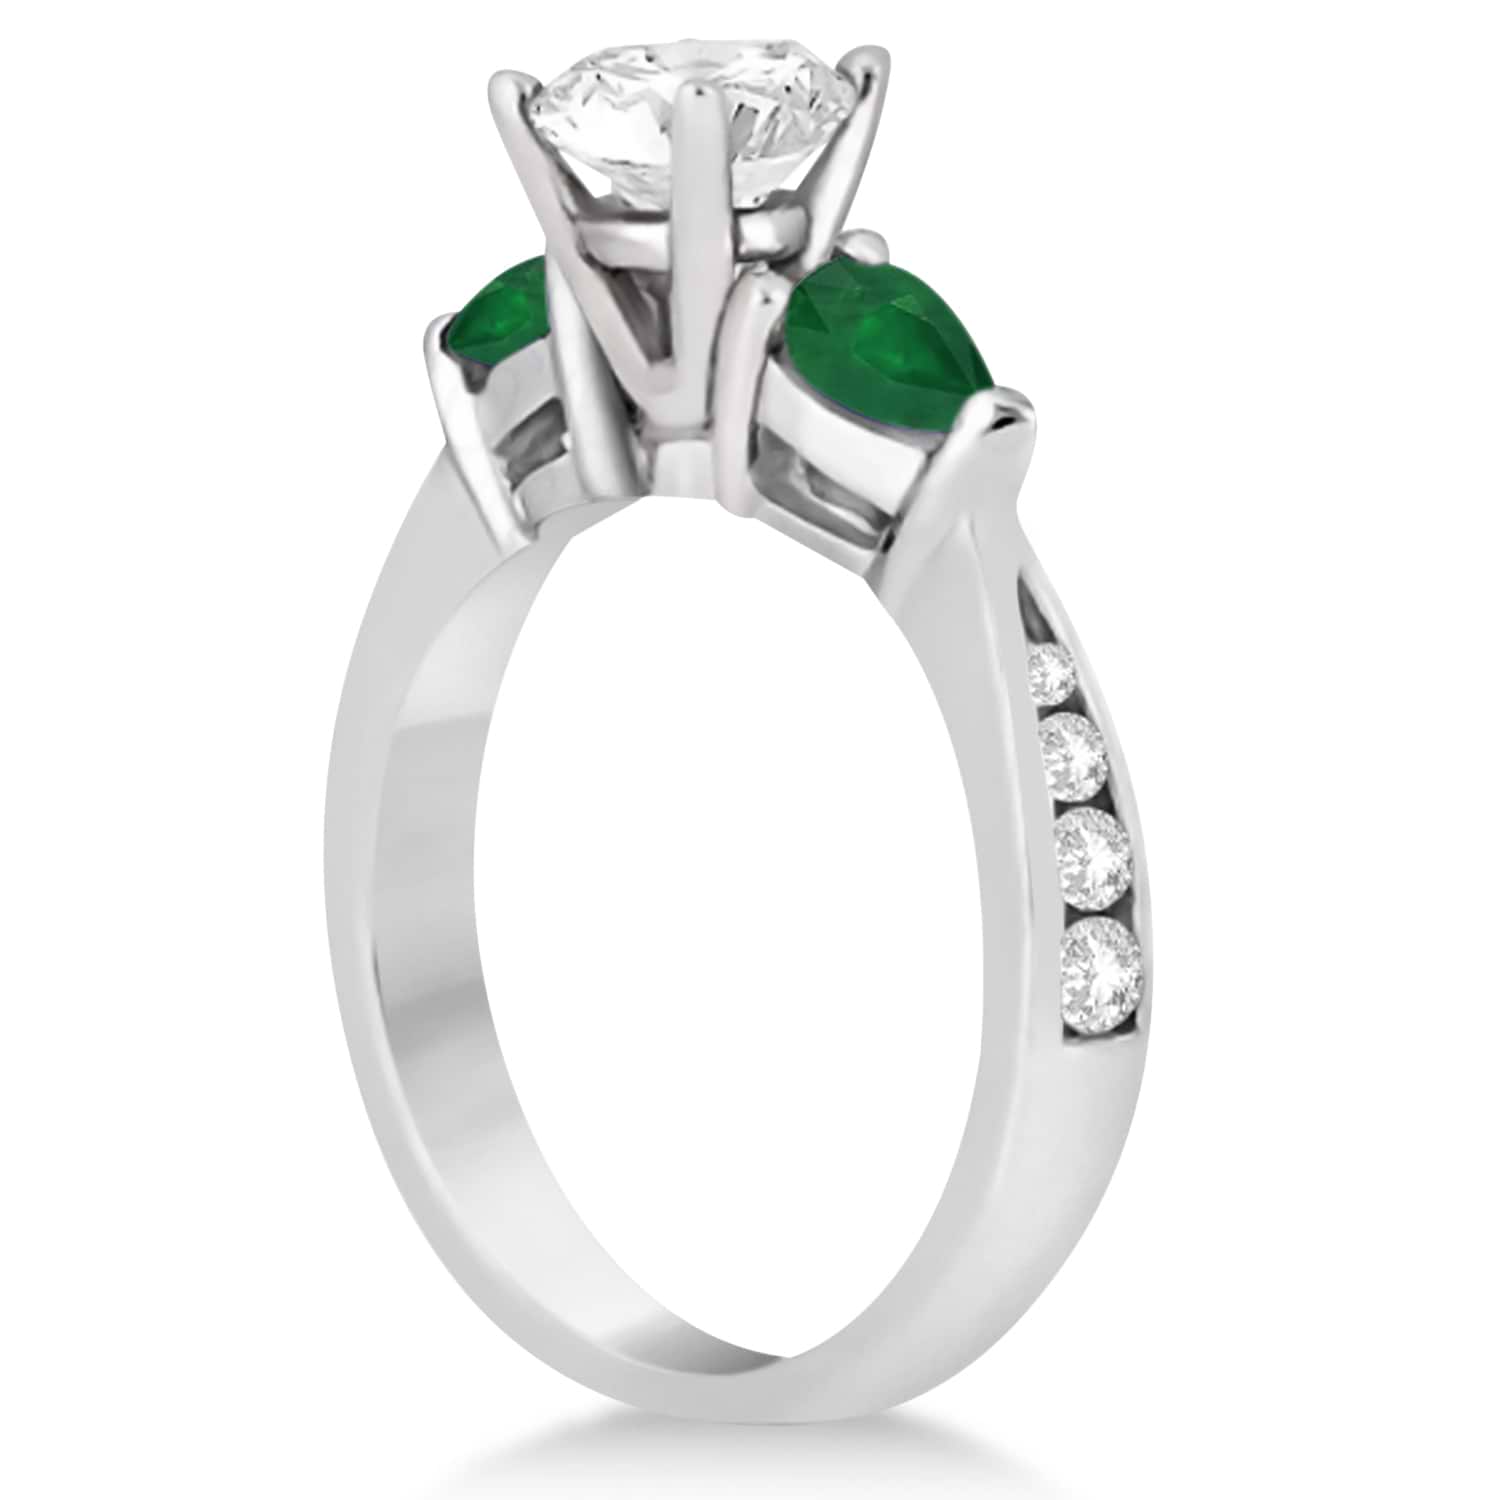 Cushion Diamond & Pear Green Emerald Engagement Ring in Platinum (1.29ct)